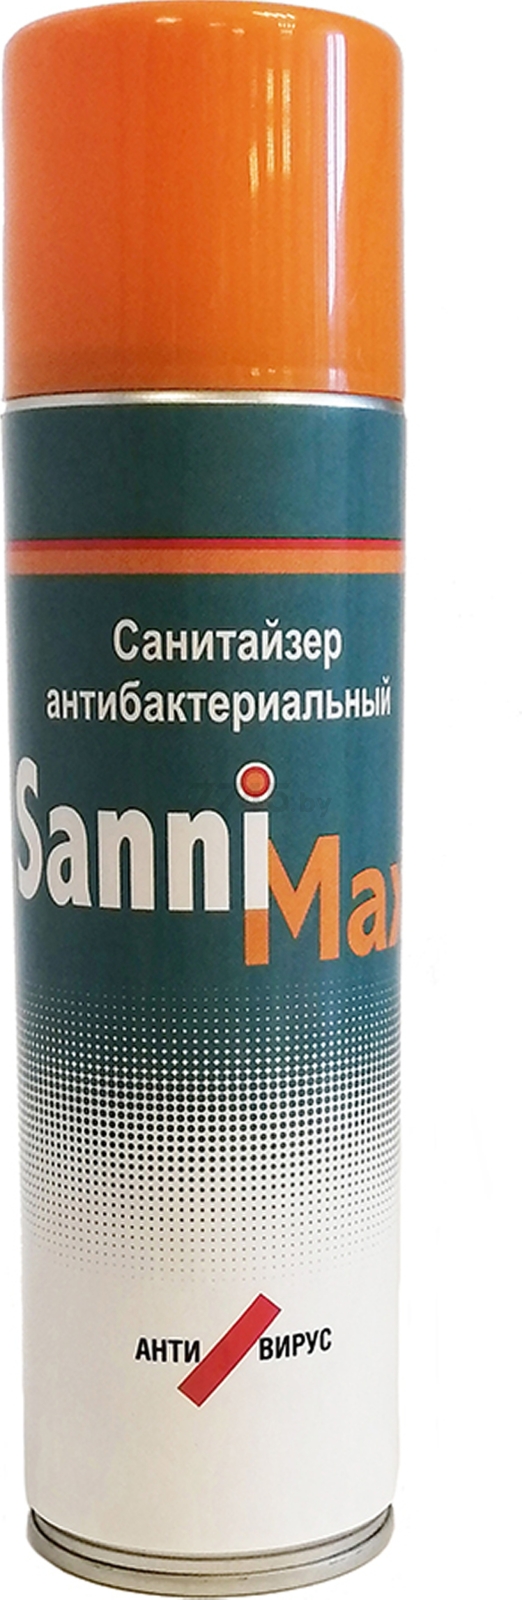 Антисептик-спрей для рук SANNI MAX Антибактериальный 335 мл